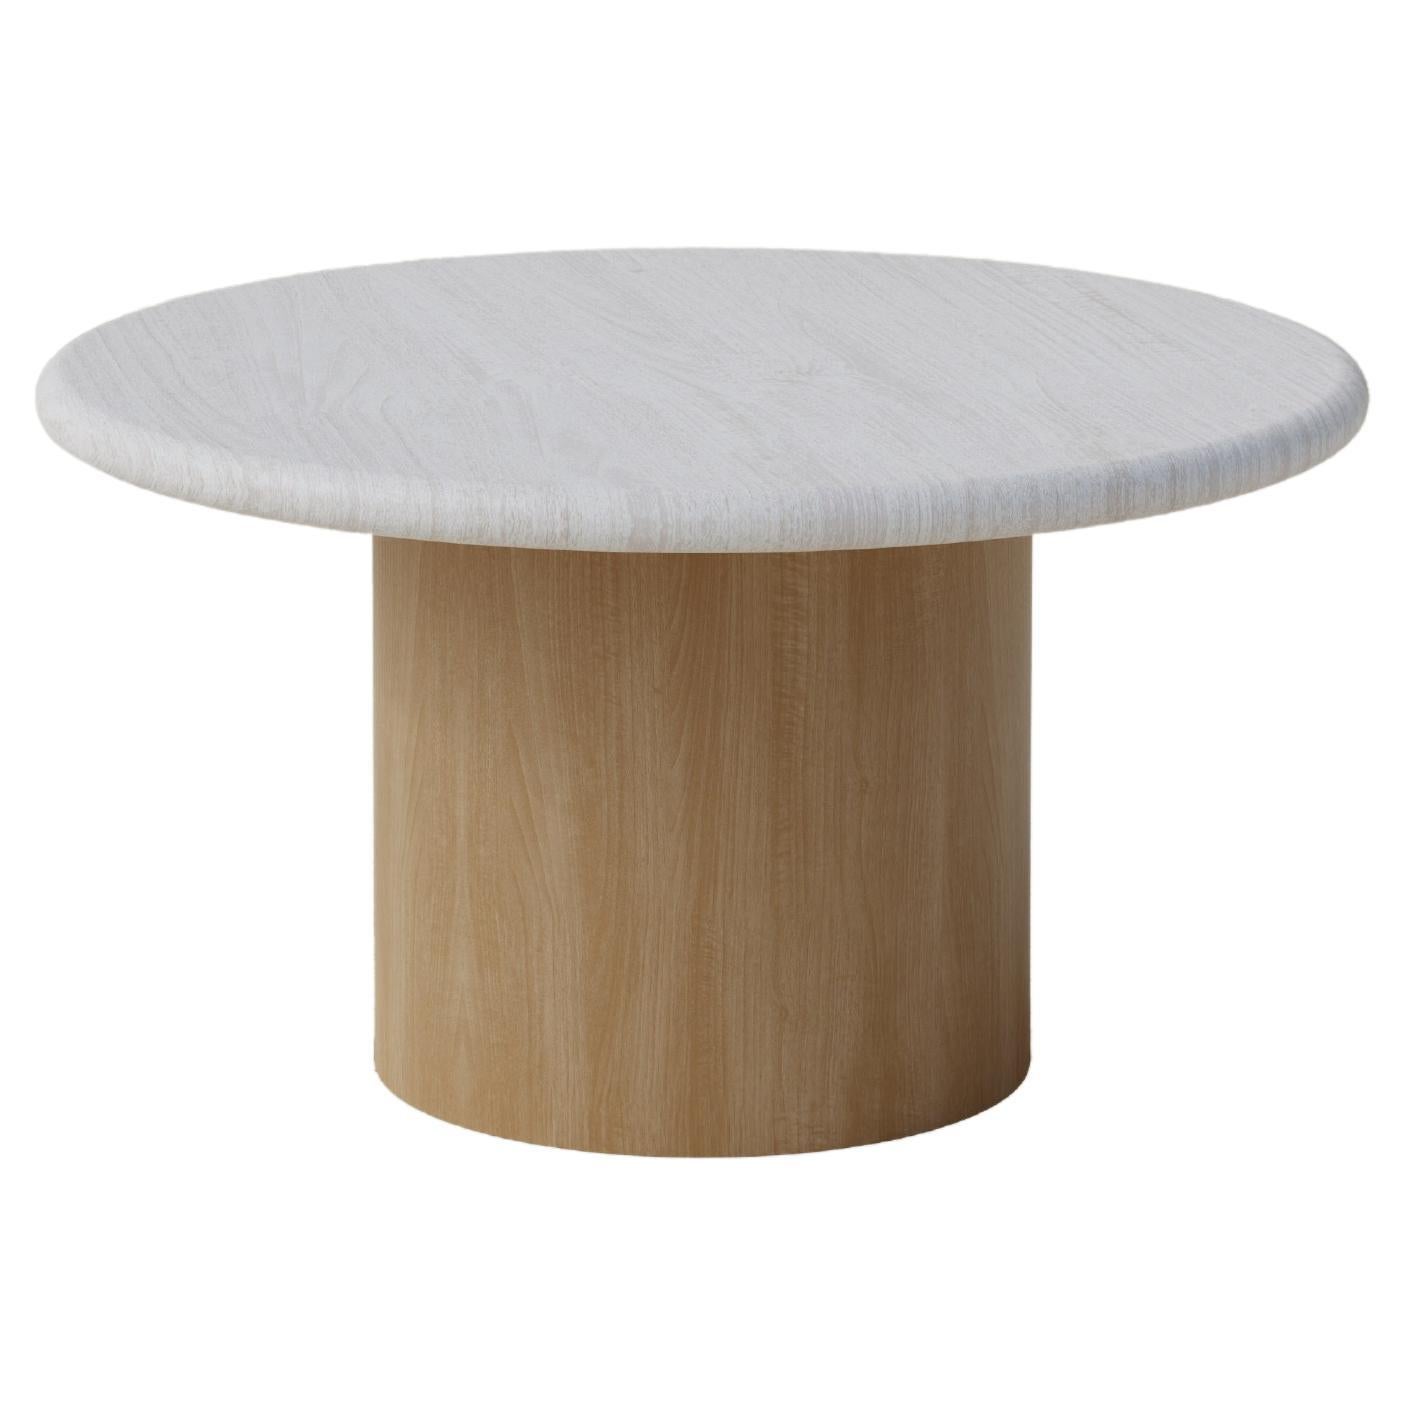 Raindrop Coffee Table, 600, White Oak / Oak For Sale